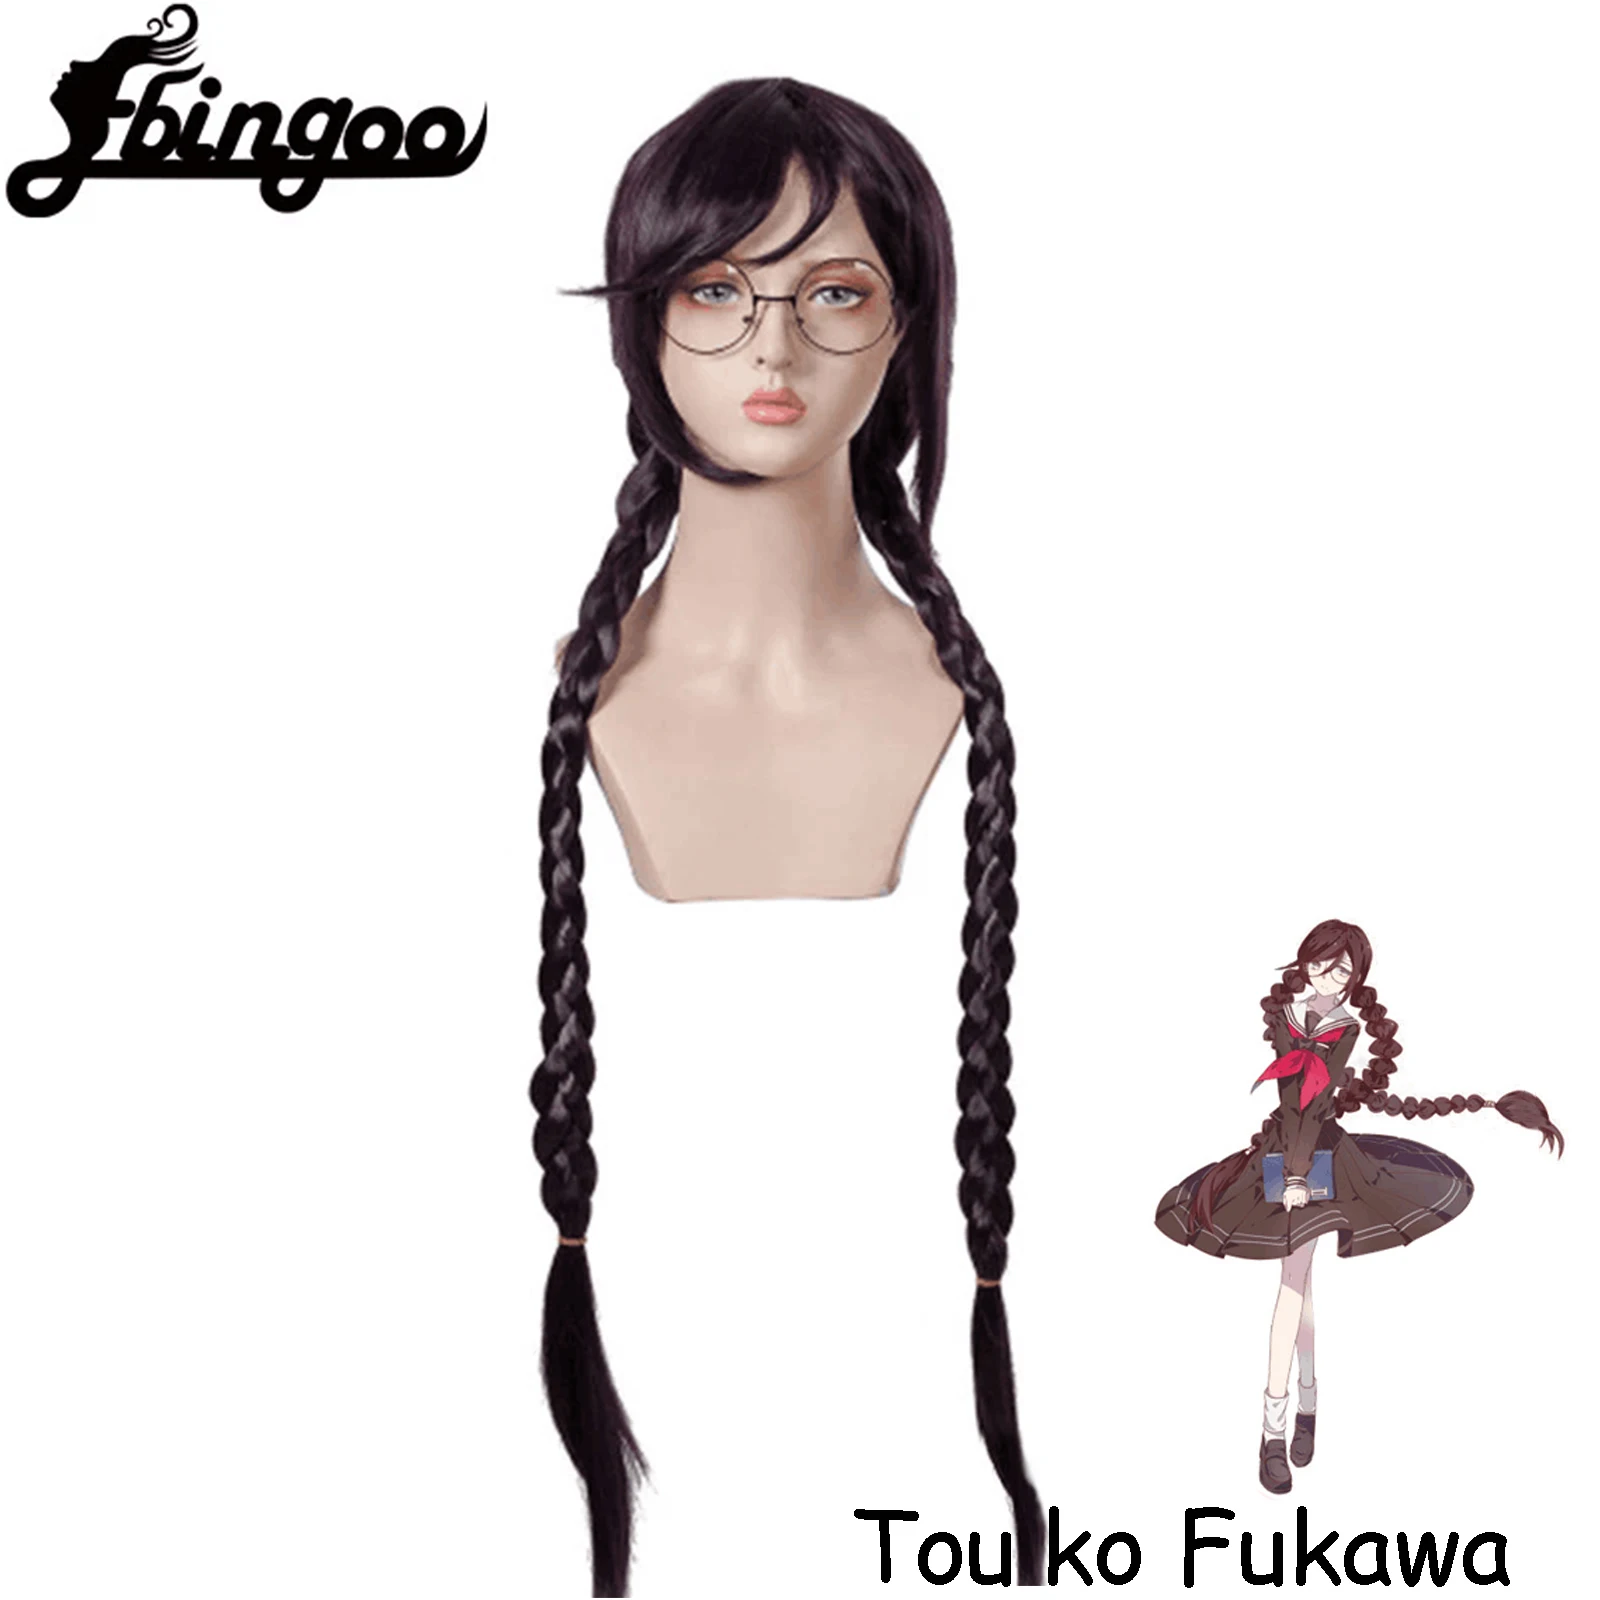 Ebingoo Synthetic Wig Danganronpa Touko Fukawa Cosplay Wigs Long Dark Purple Braids Heat Resistant Hair Wigs For Costume Party